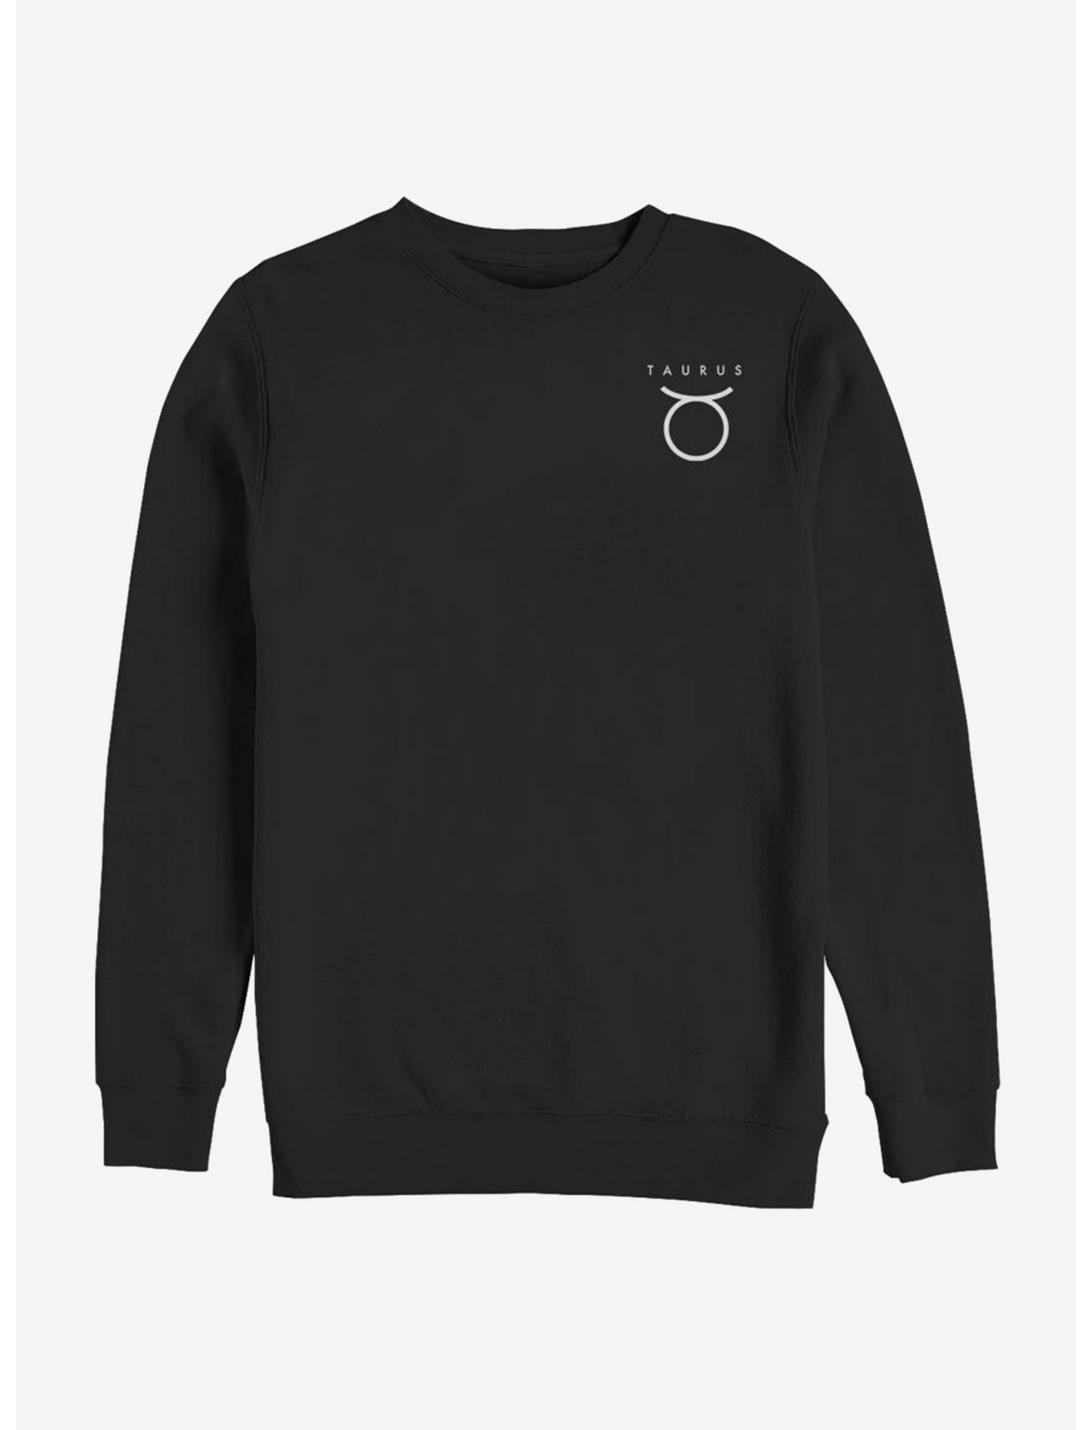 Taurus Astrology Sign Sweatshirt, BLACK, hi-res